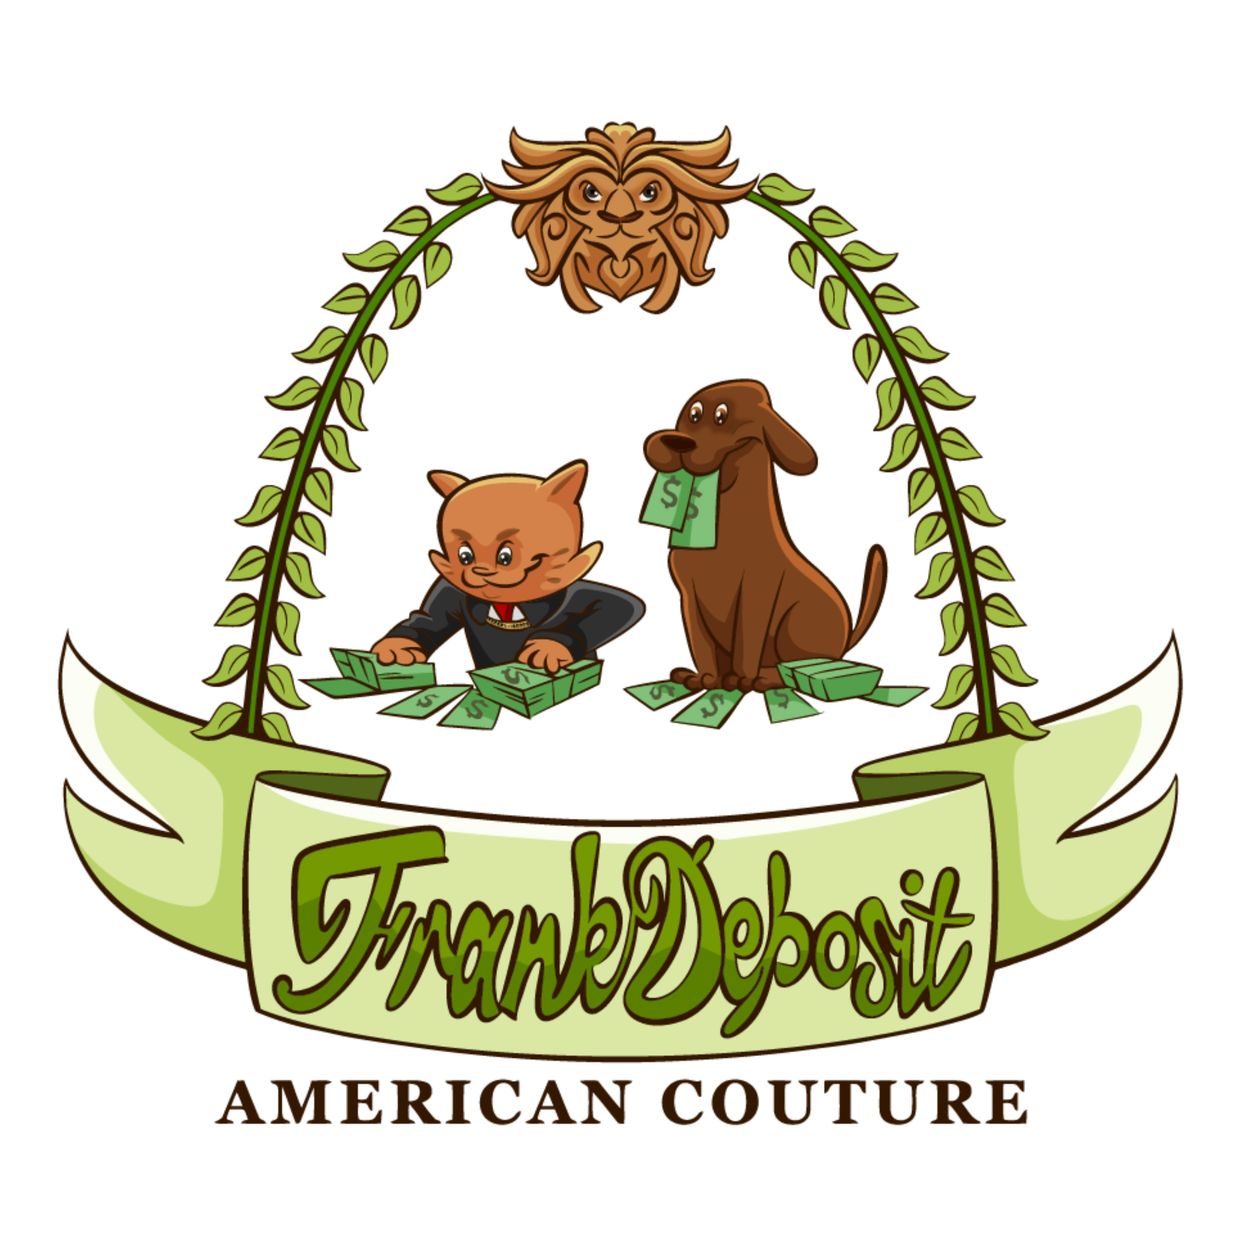 Frank Deposit American Couture Logo